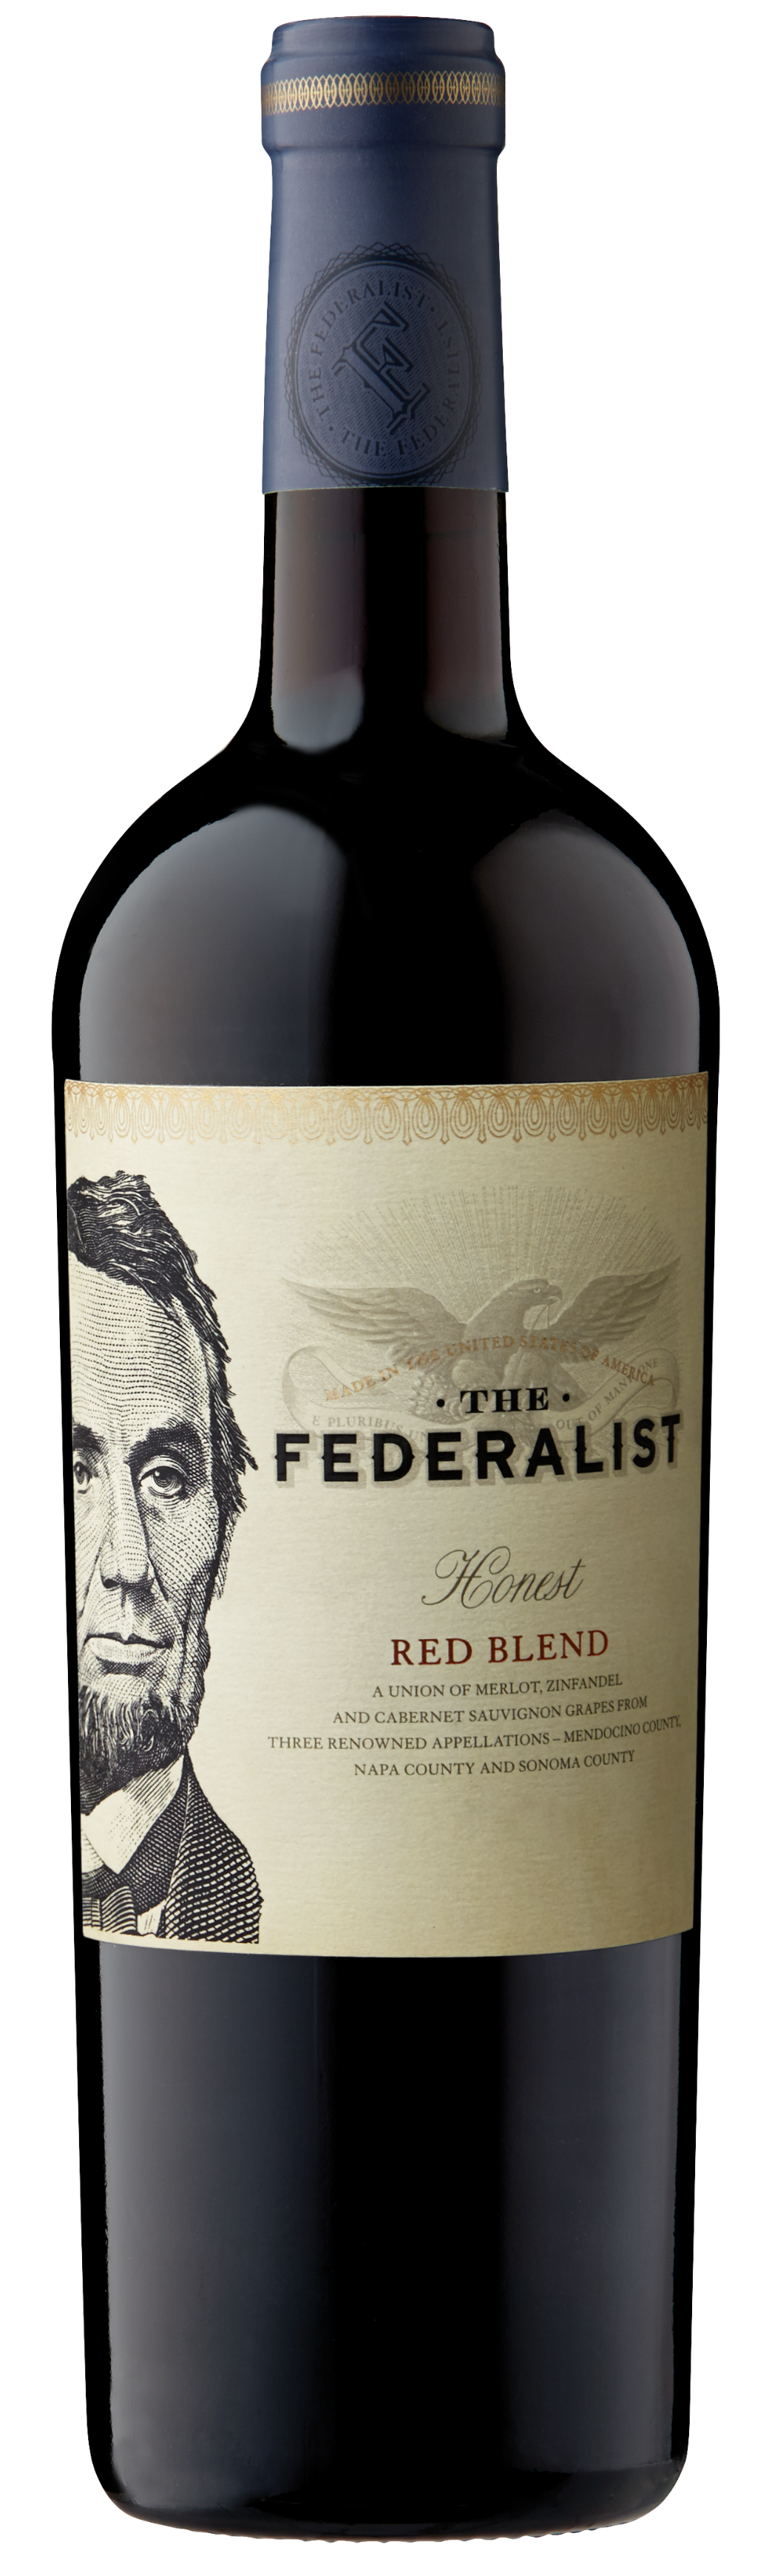 The Federalist Honest Red Blend 2016